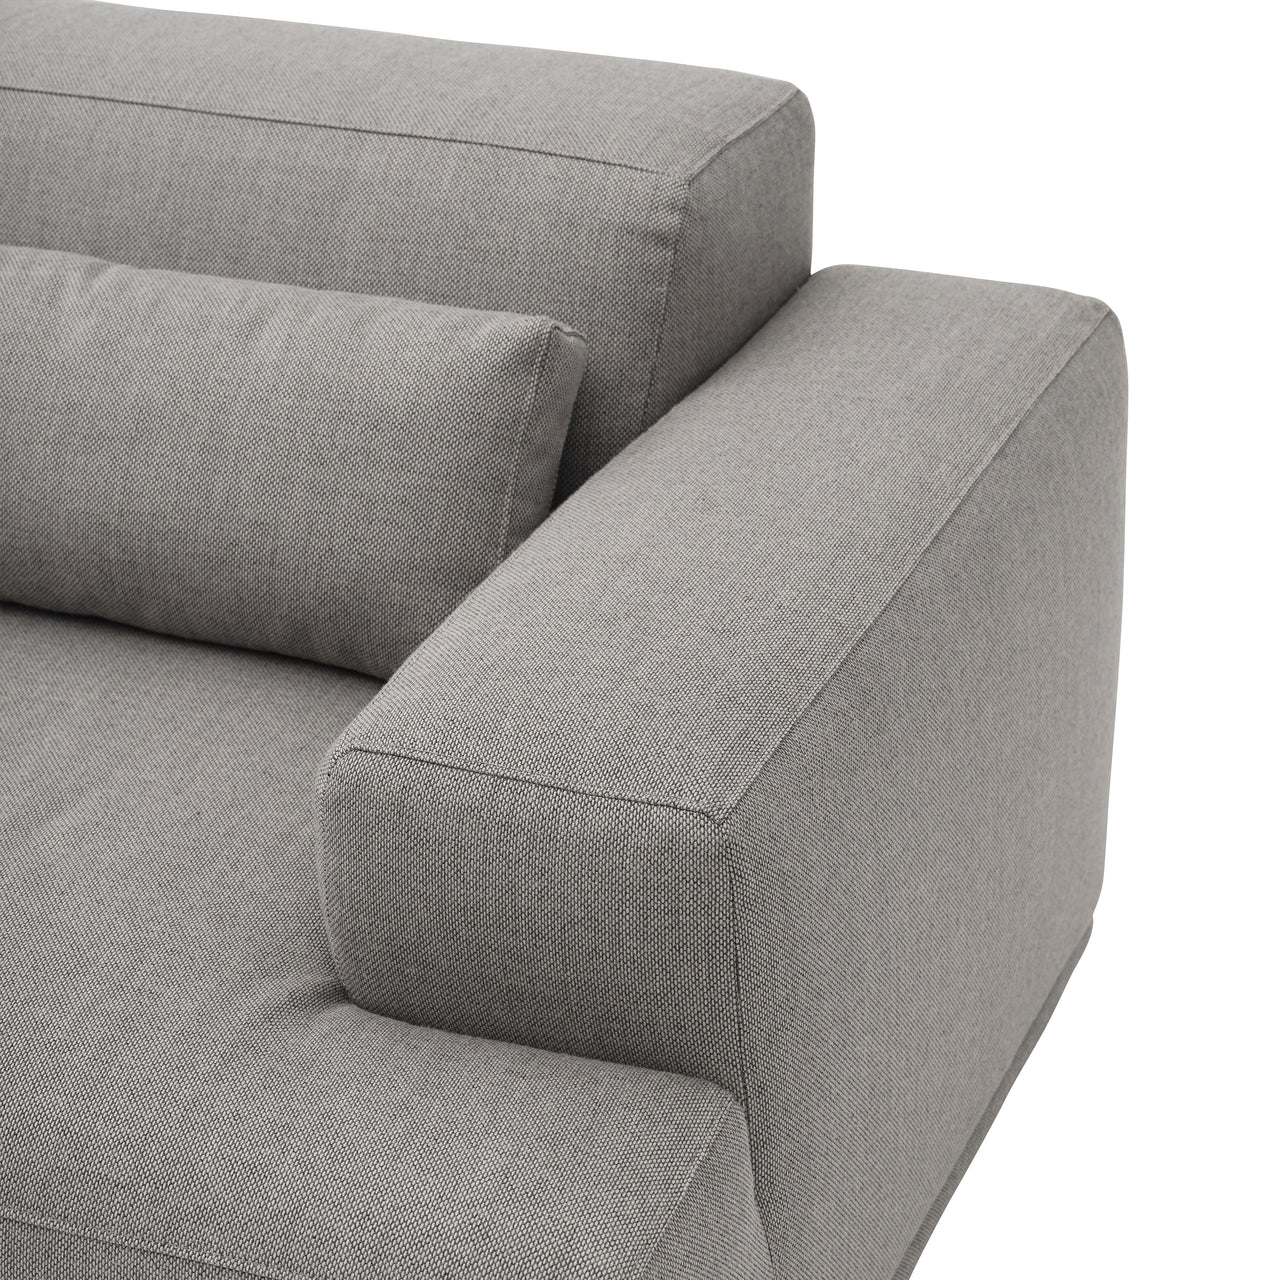 Connect Soft Modular Sofa: 3 Seater